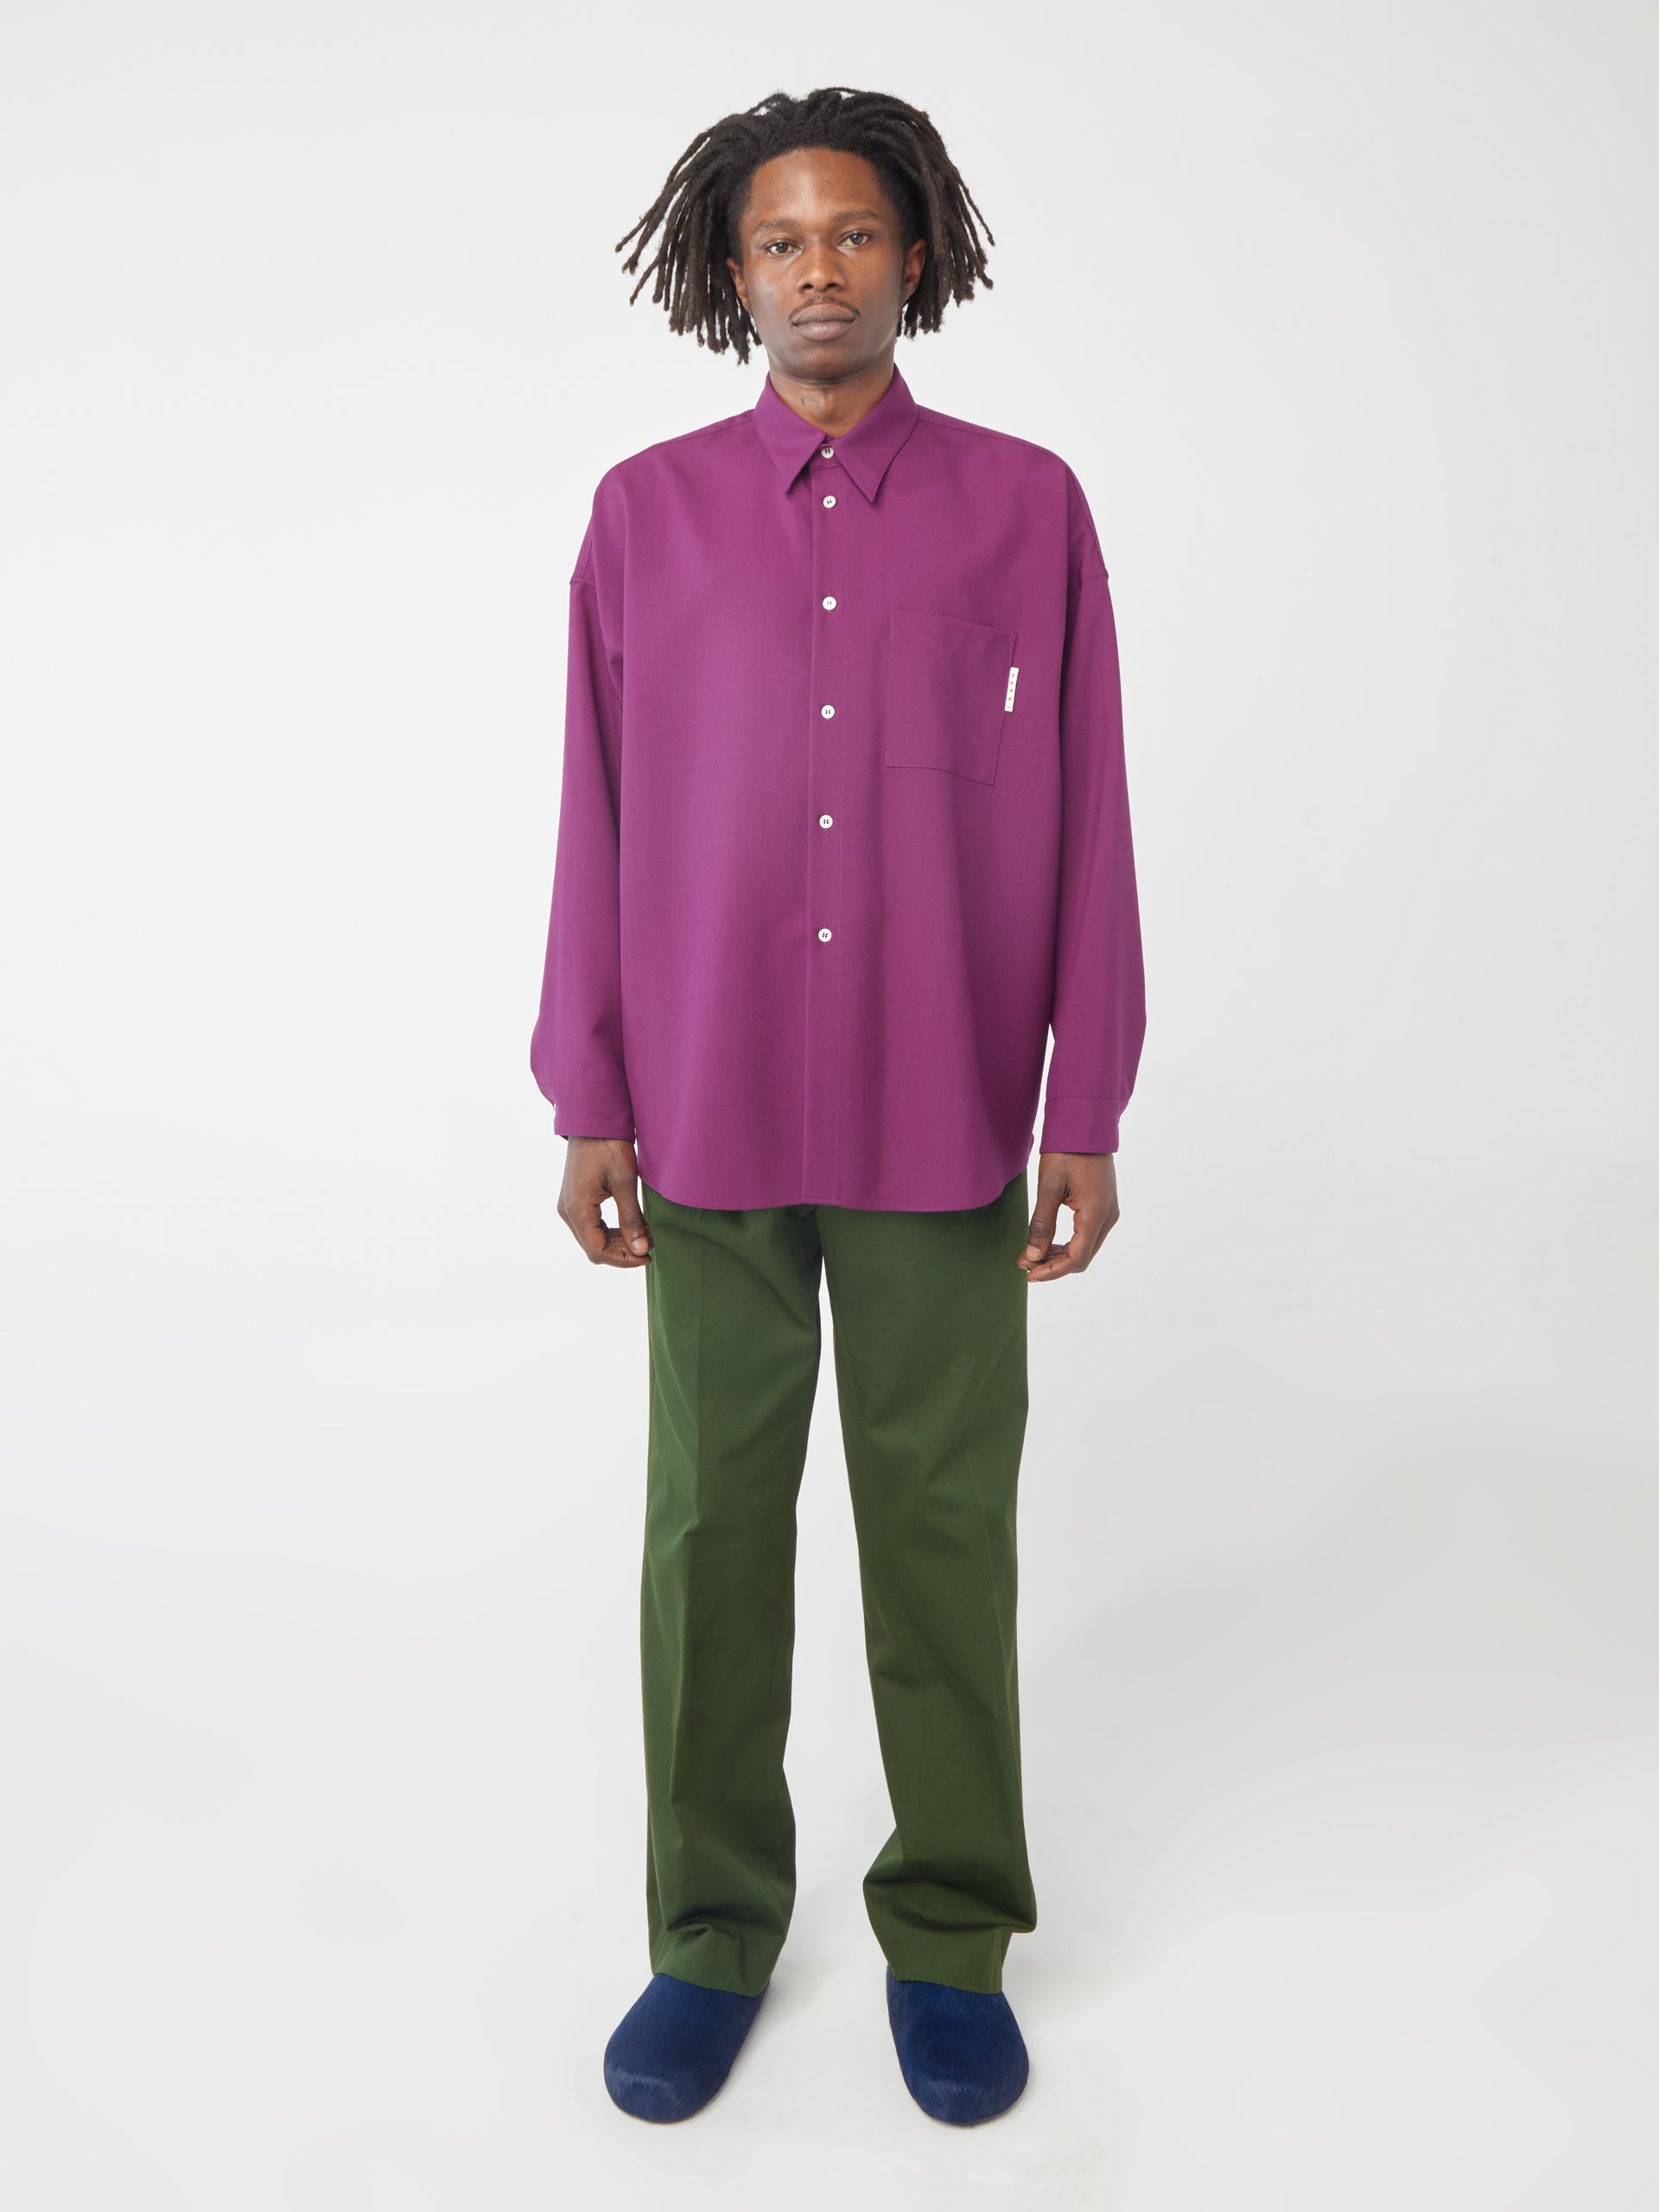 Tropical Wool Long-sleeved shirt (Dry Rose)